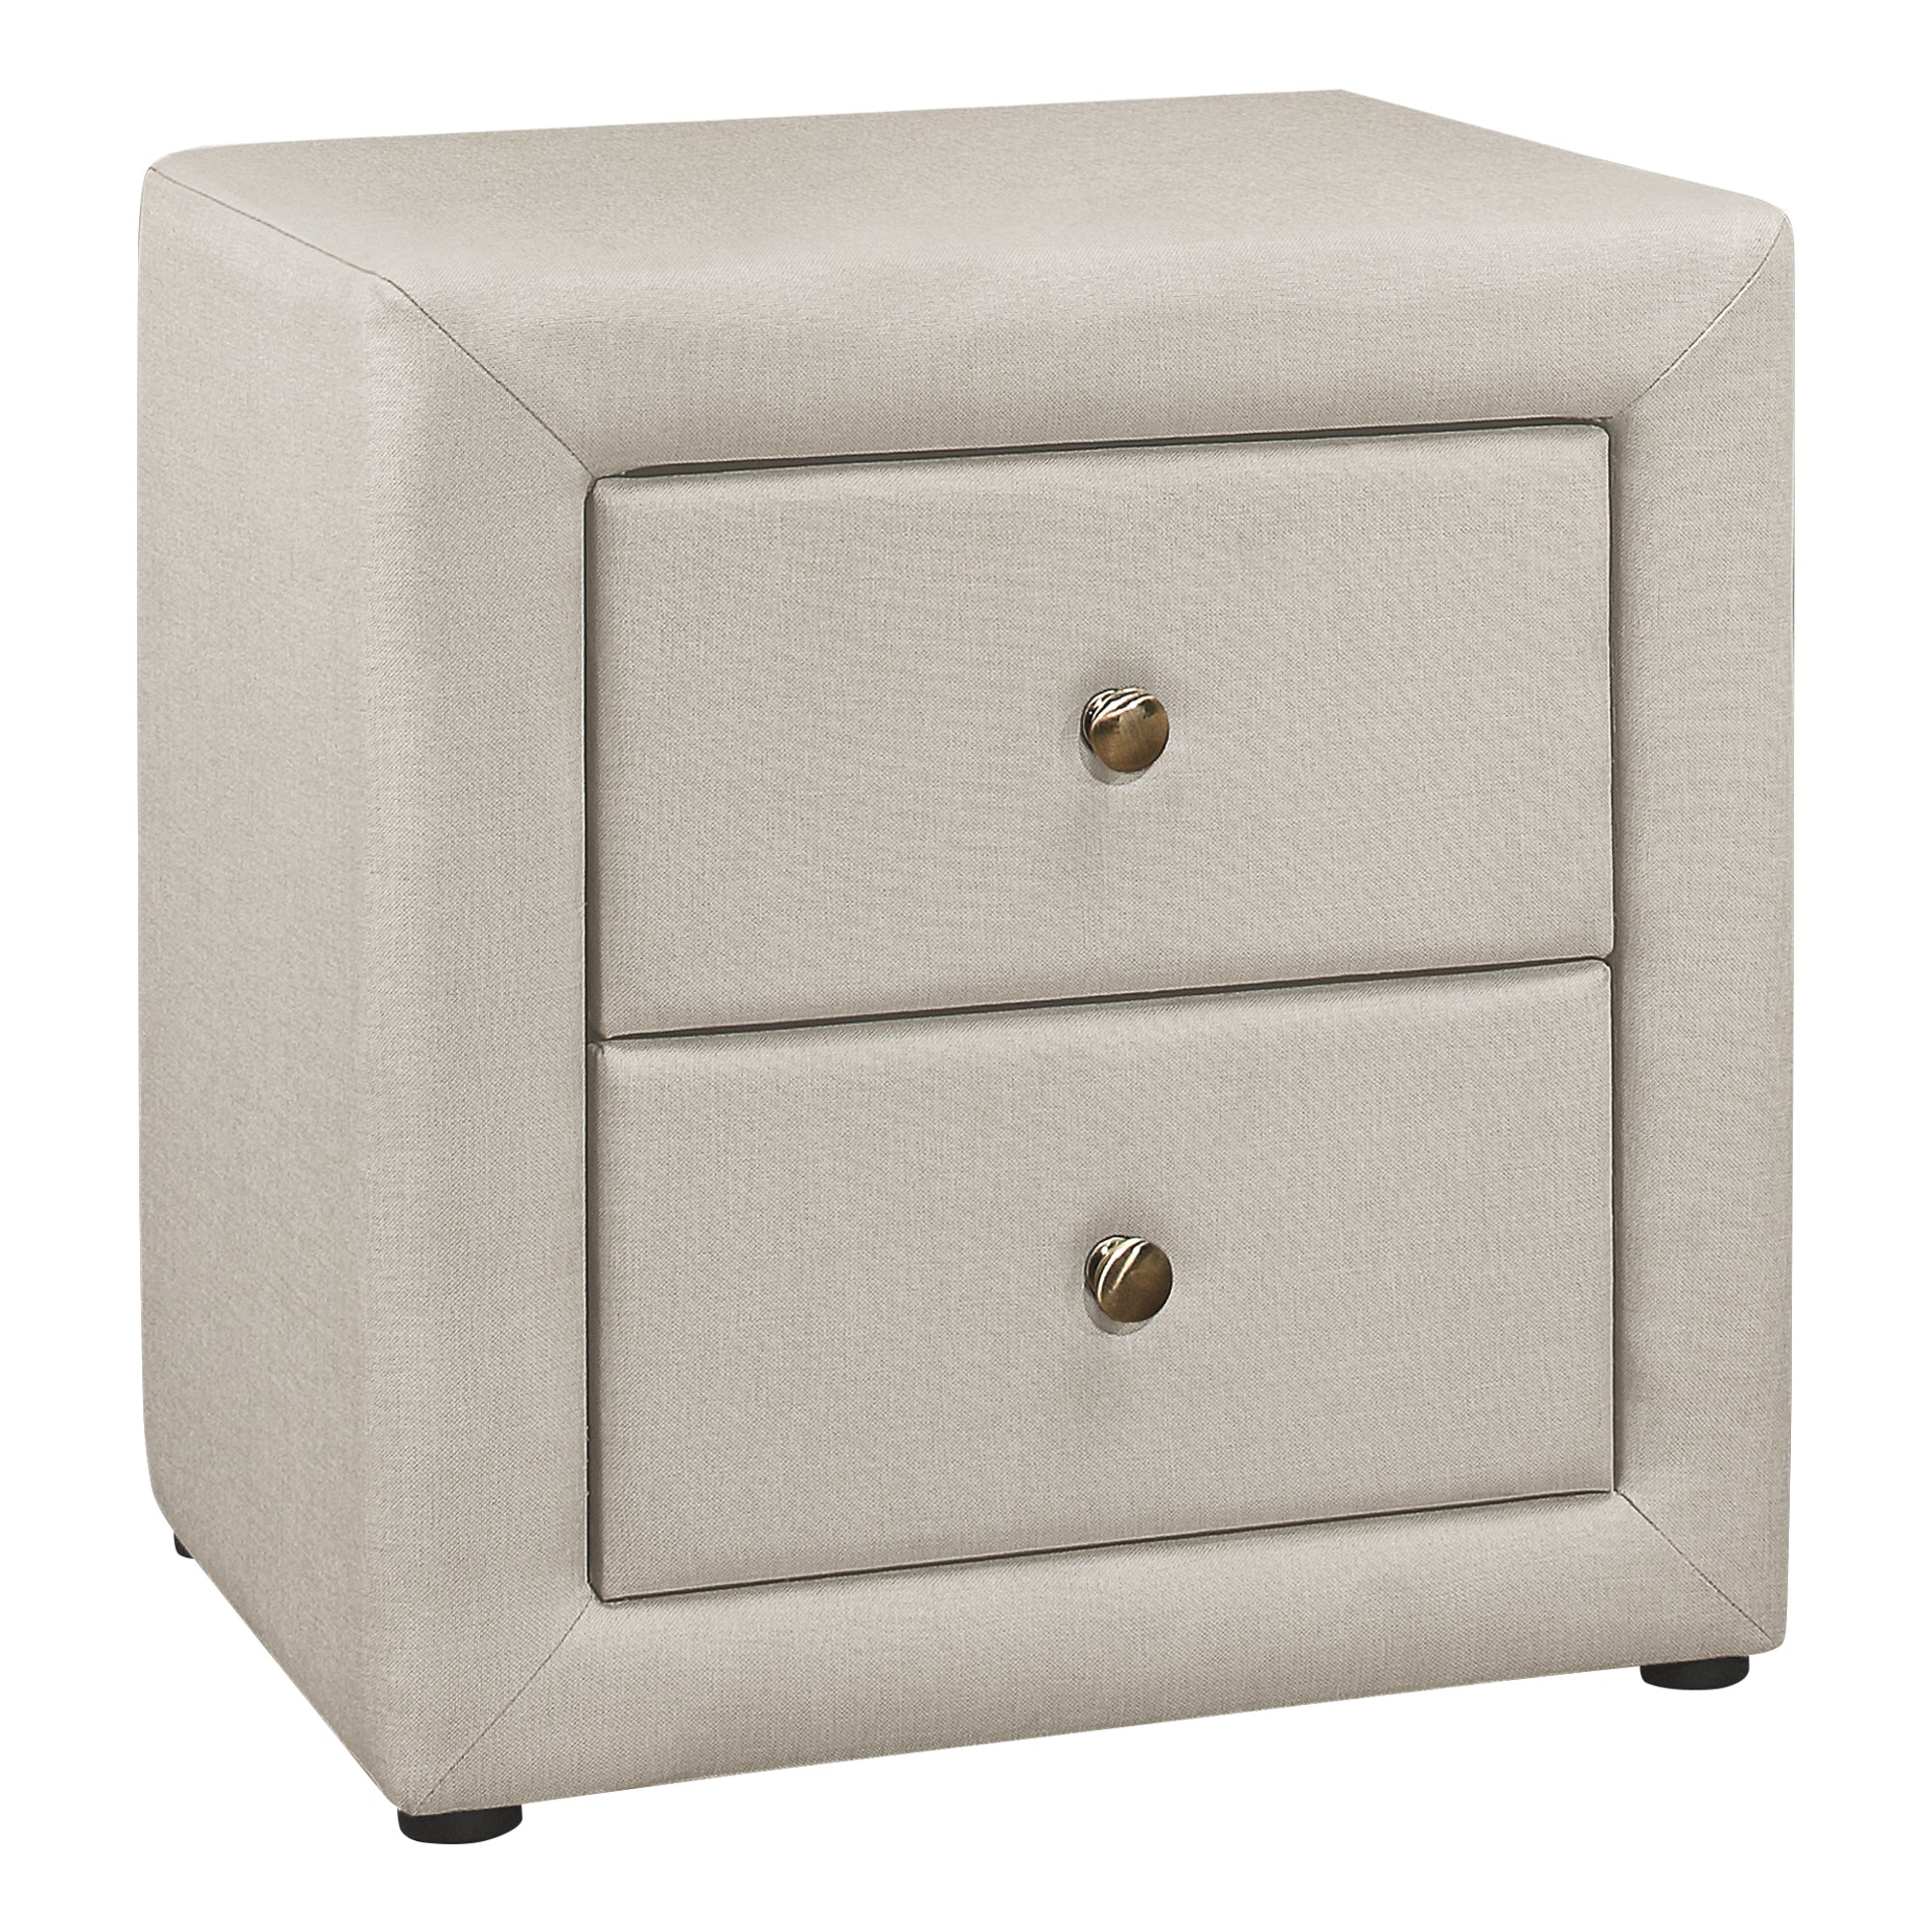 MN-825605    Nightstand - Upholstered / 2 Storage Drawers - 21"H - Beige Linen-Look